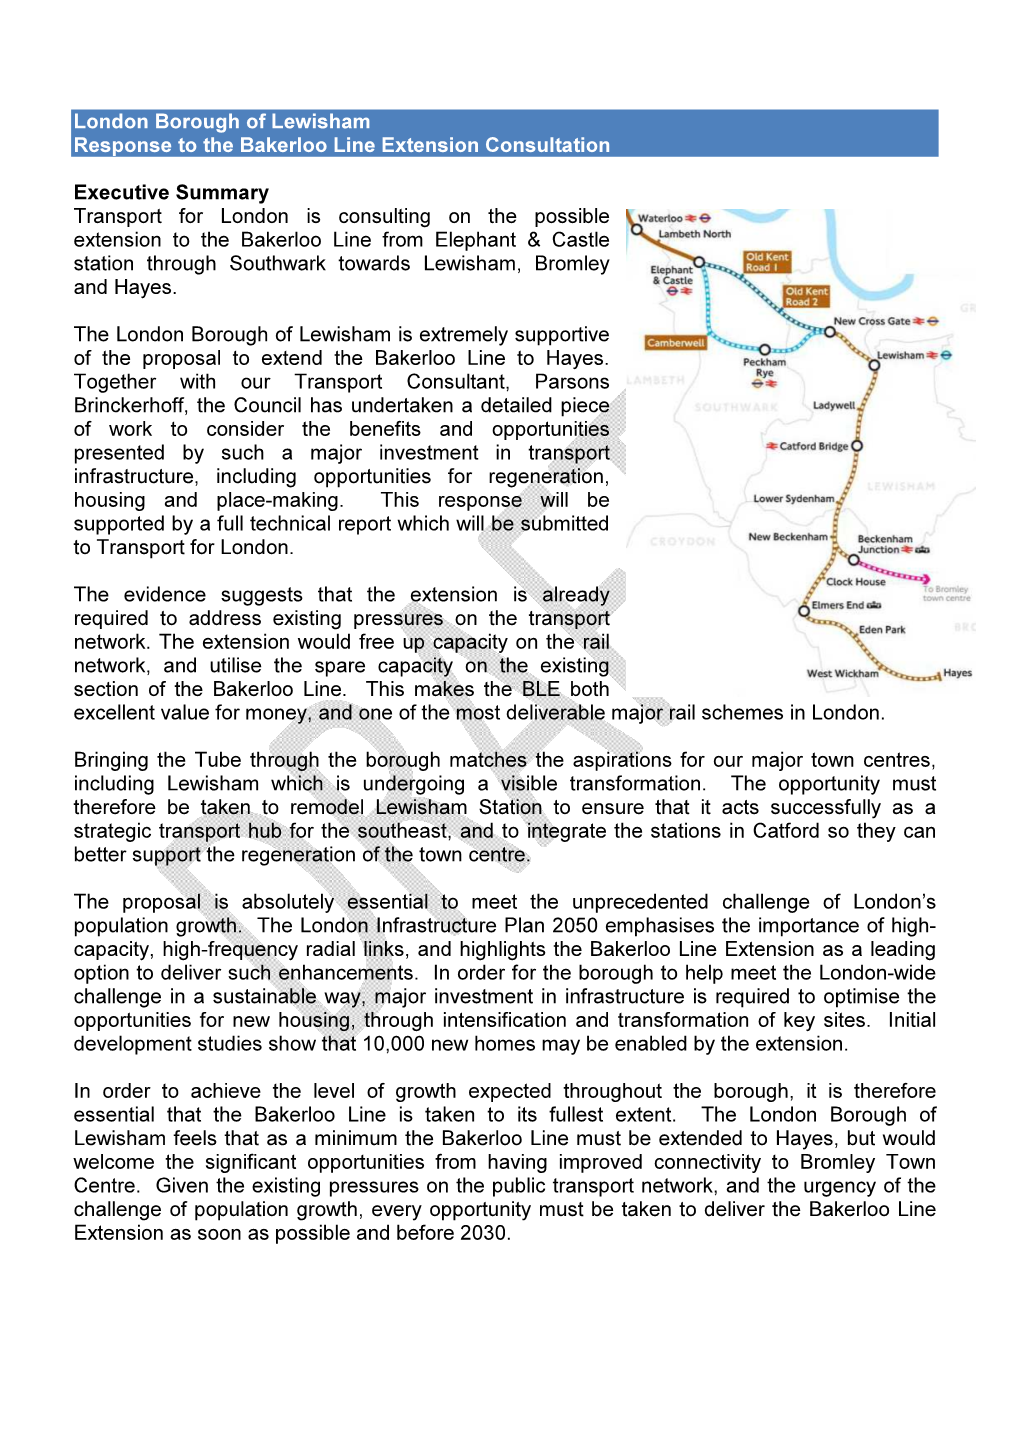 London Borough of Lewisham Response to the Bakerloo Line Extension Consultation